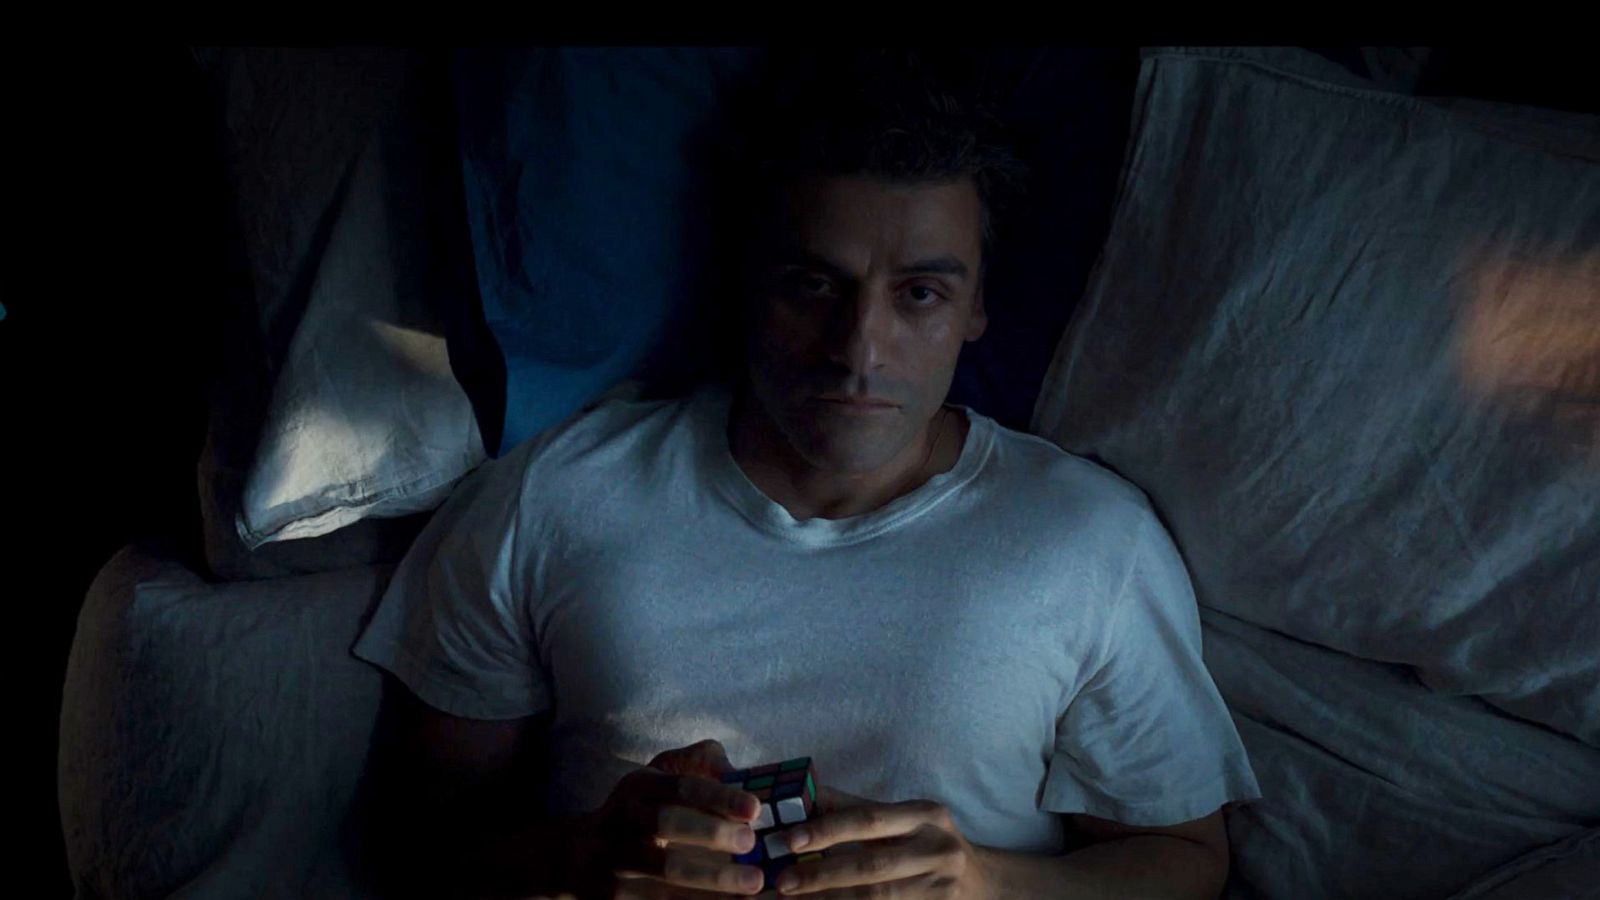 MOON KNIGHT Season 2 Teaser (2023) With Oscar Isaac & May Calamawy 